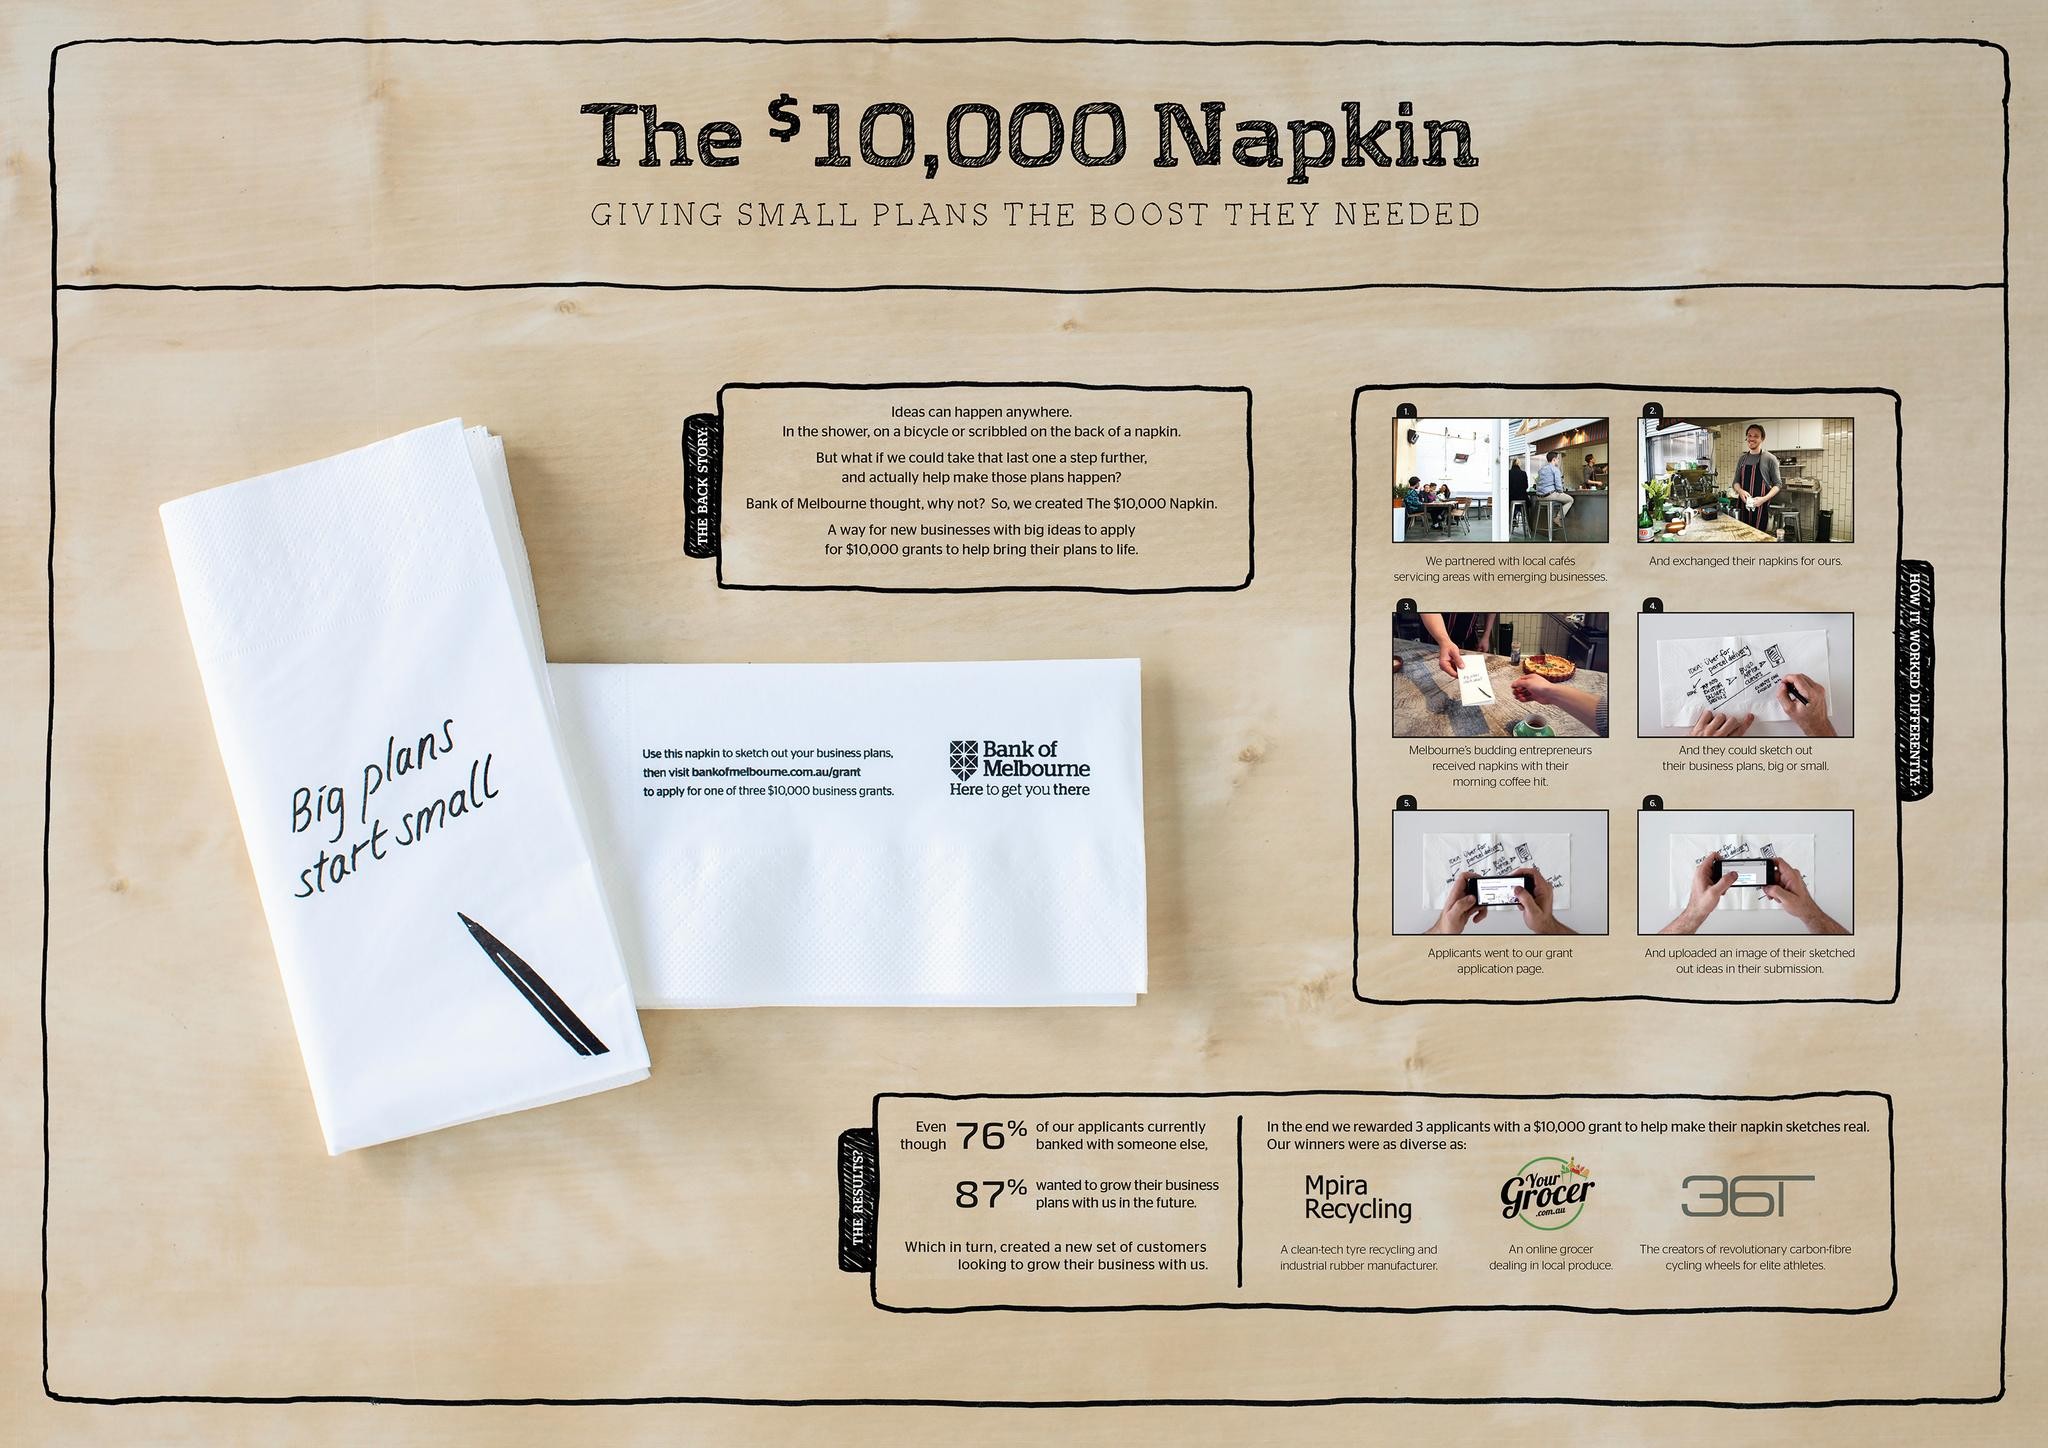 THE $10,000 NAPKIN